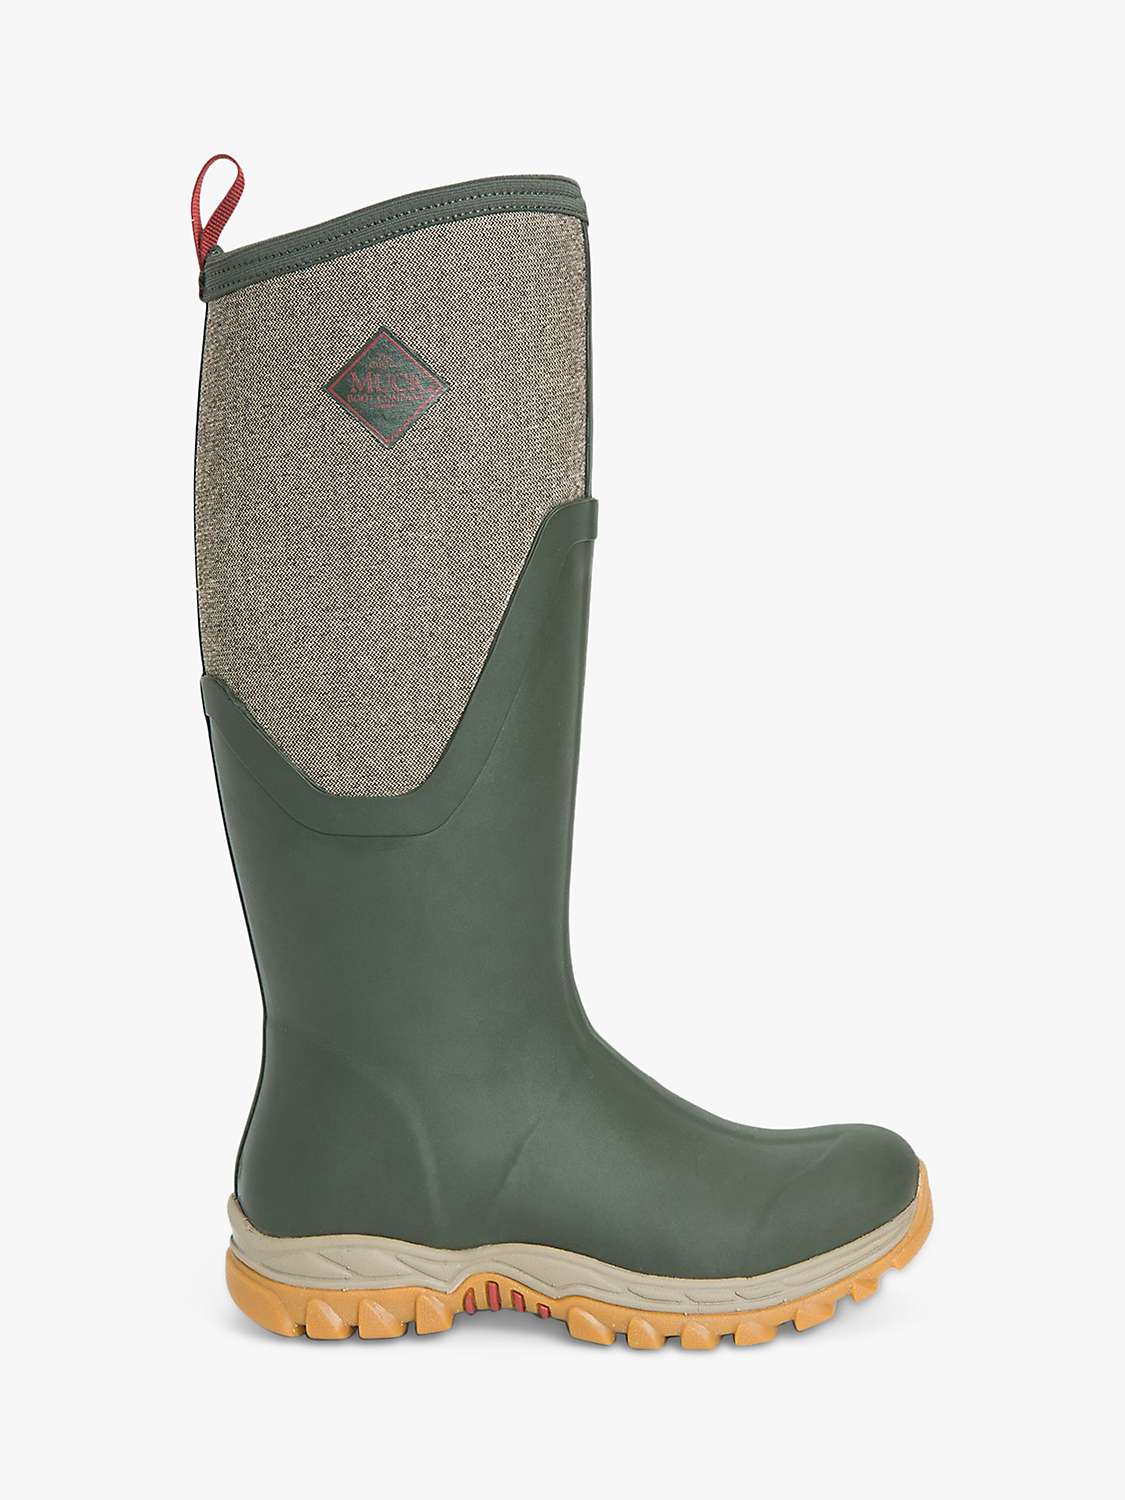 Buy Muck Arctic Sport Tall Wellington Boots Online at johnlewis.com